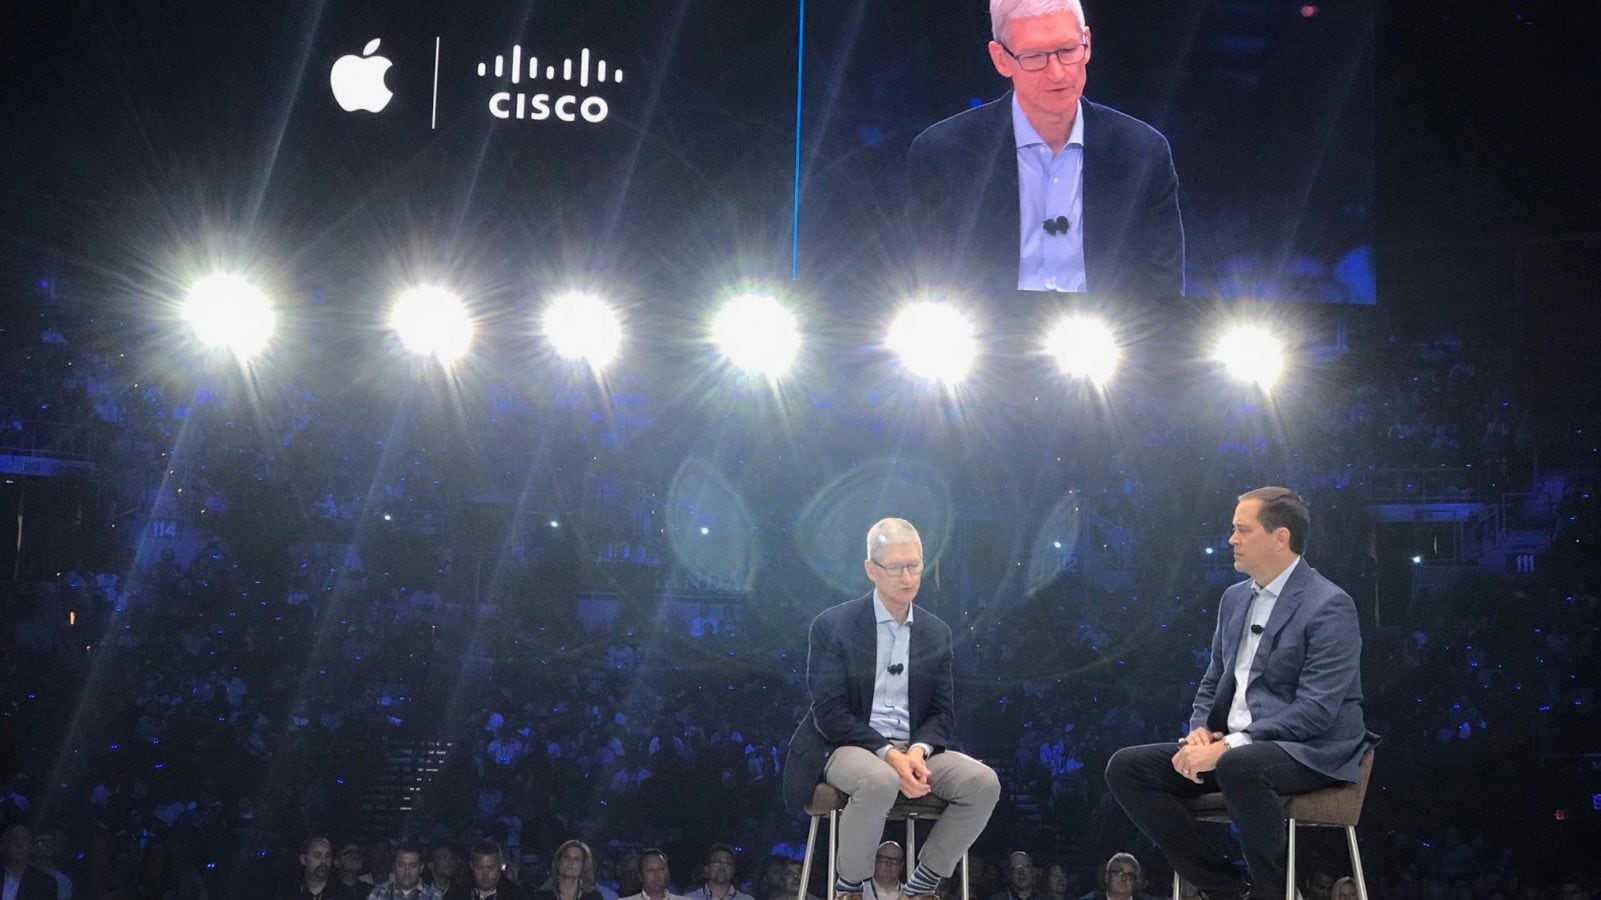 The Next Phase of the Apple Cisco Partnership